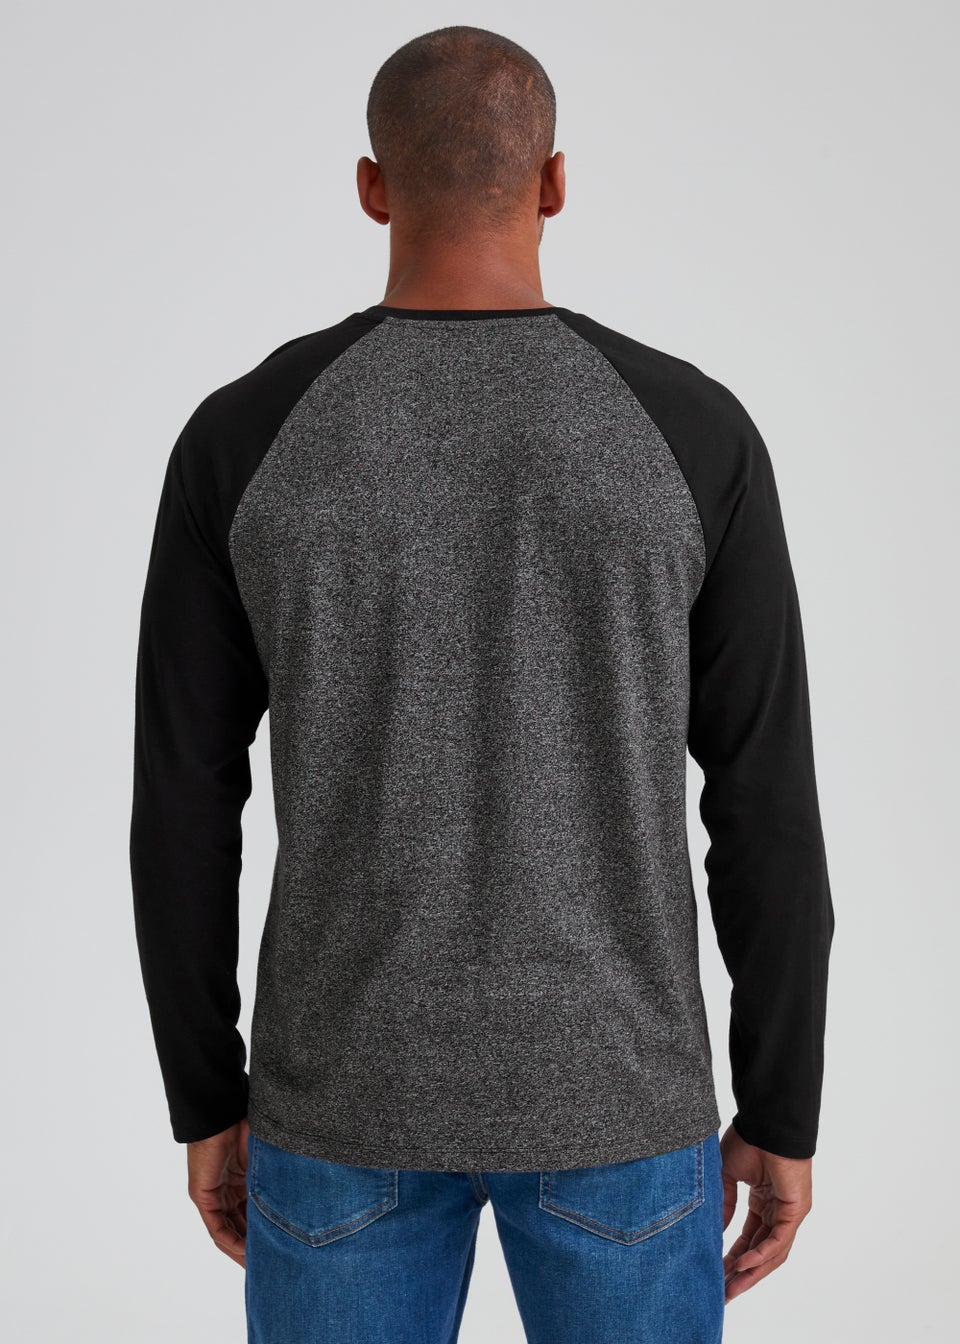 Black & Grey Grindle Raglan Long Sleeve T-Shirt